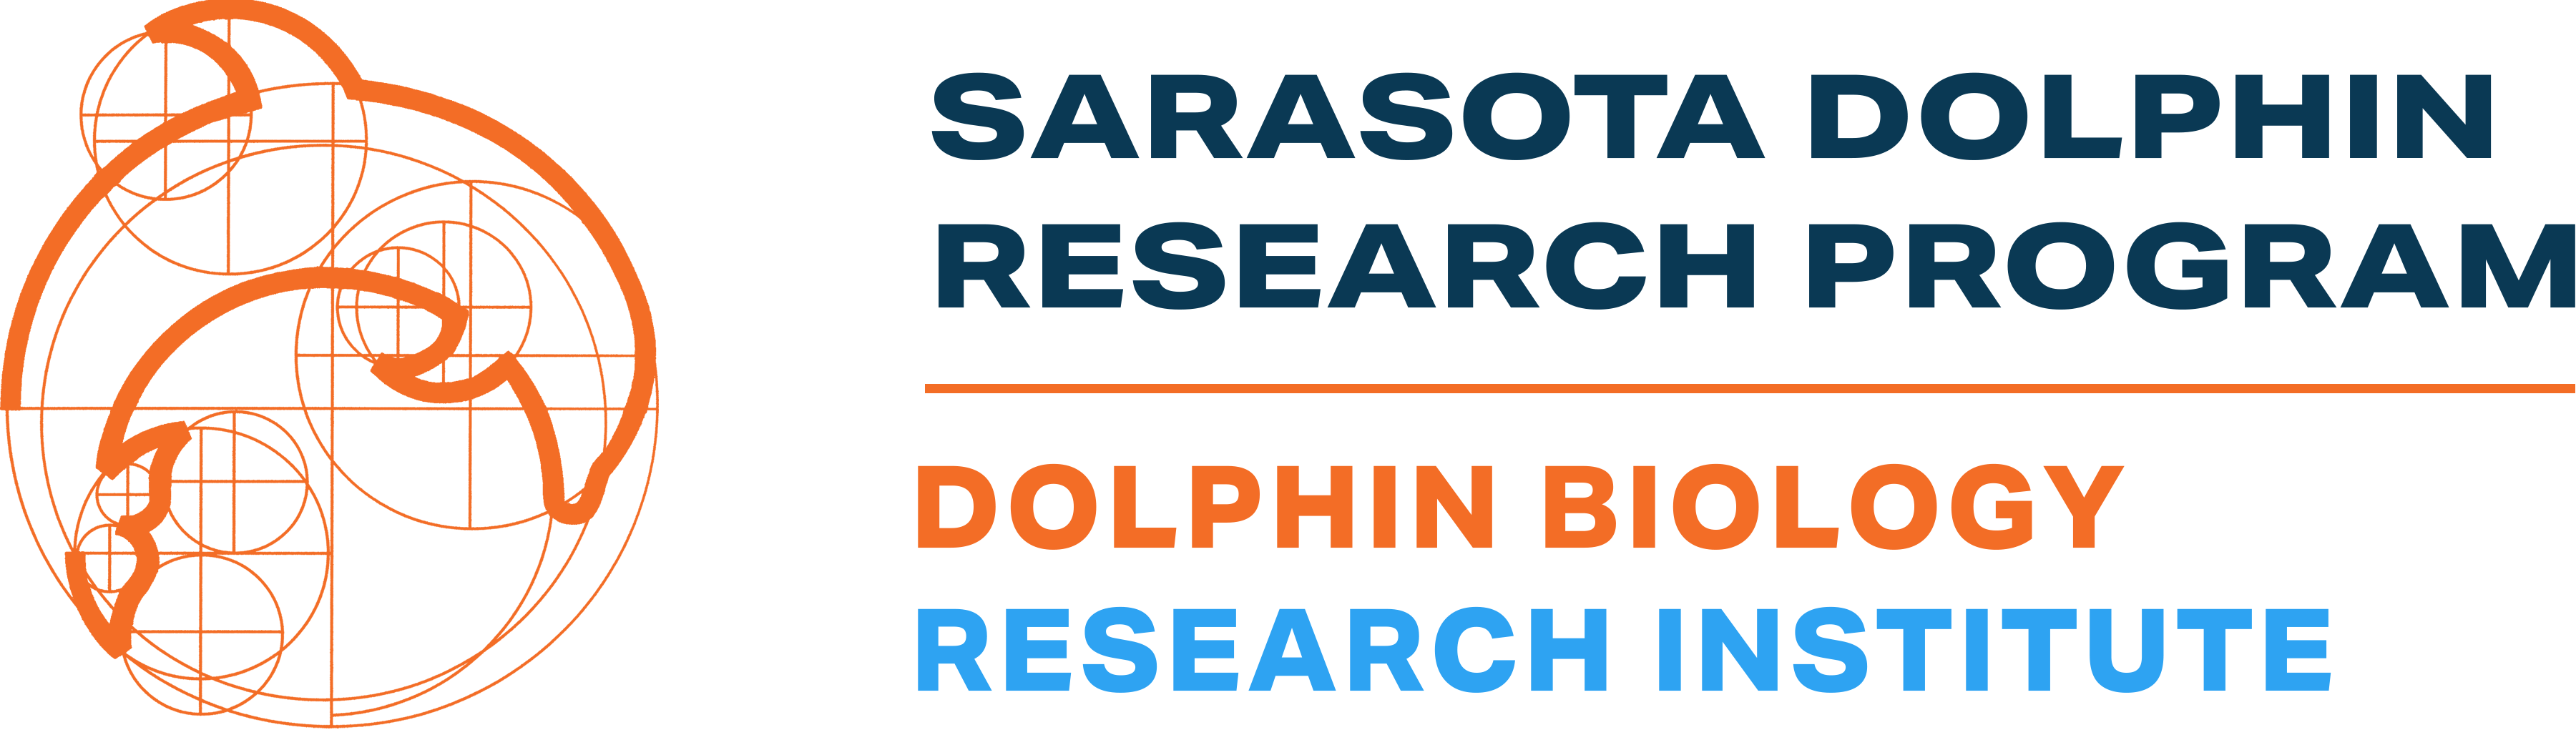 Piney Point Dolphin Entanglement - Sarasota Dolphin Research Program